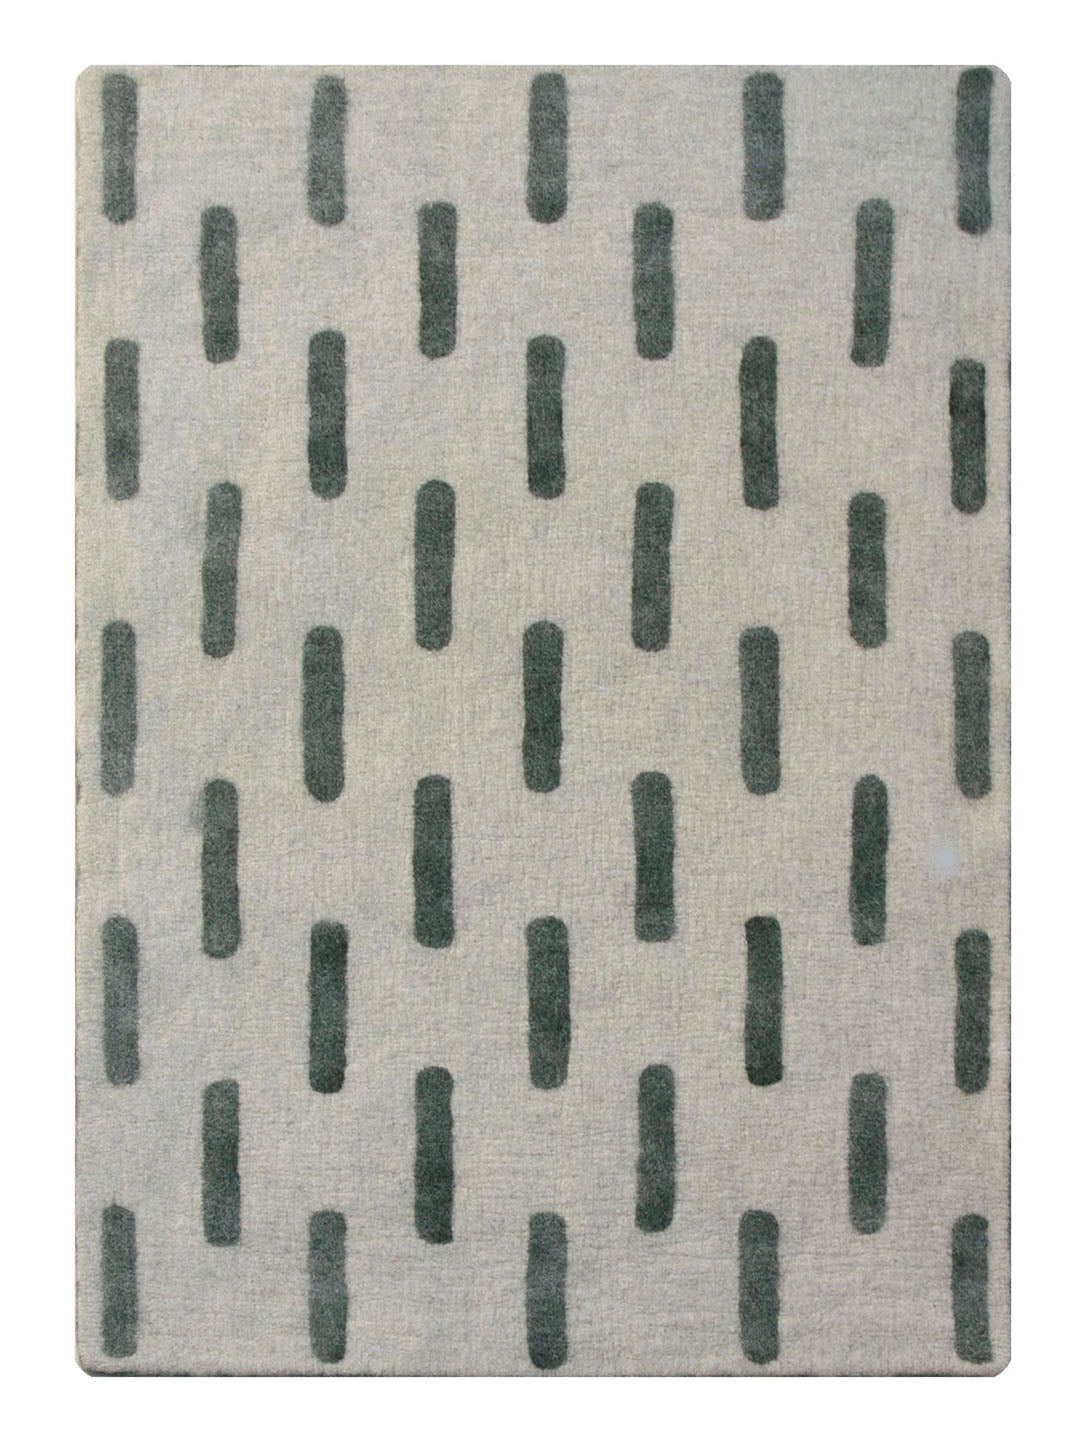 Rain rug 5' x 7'